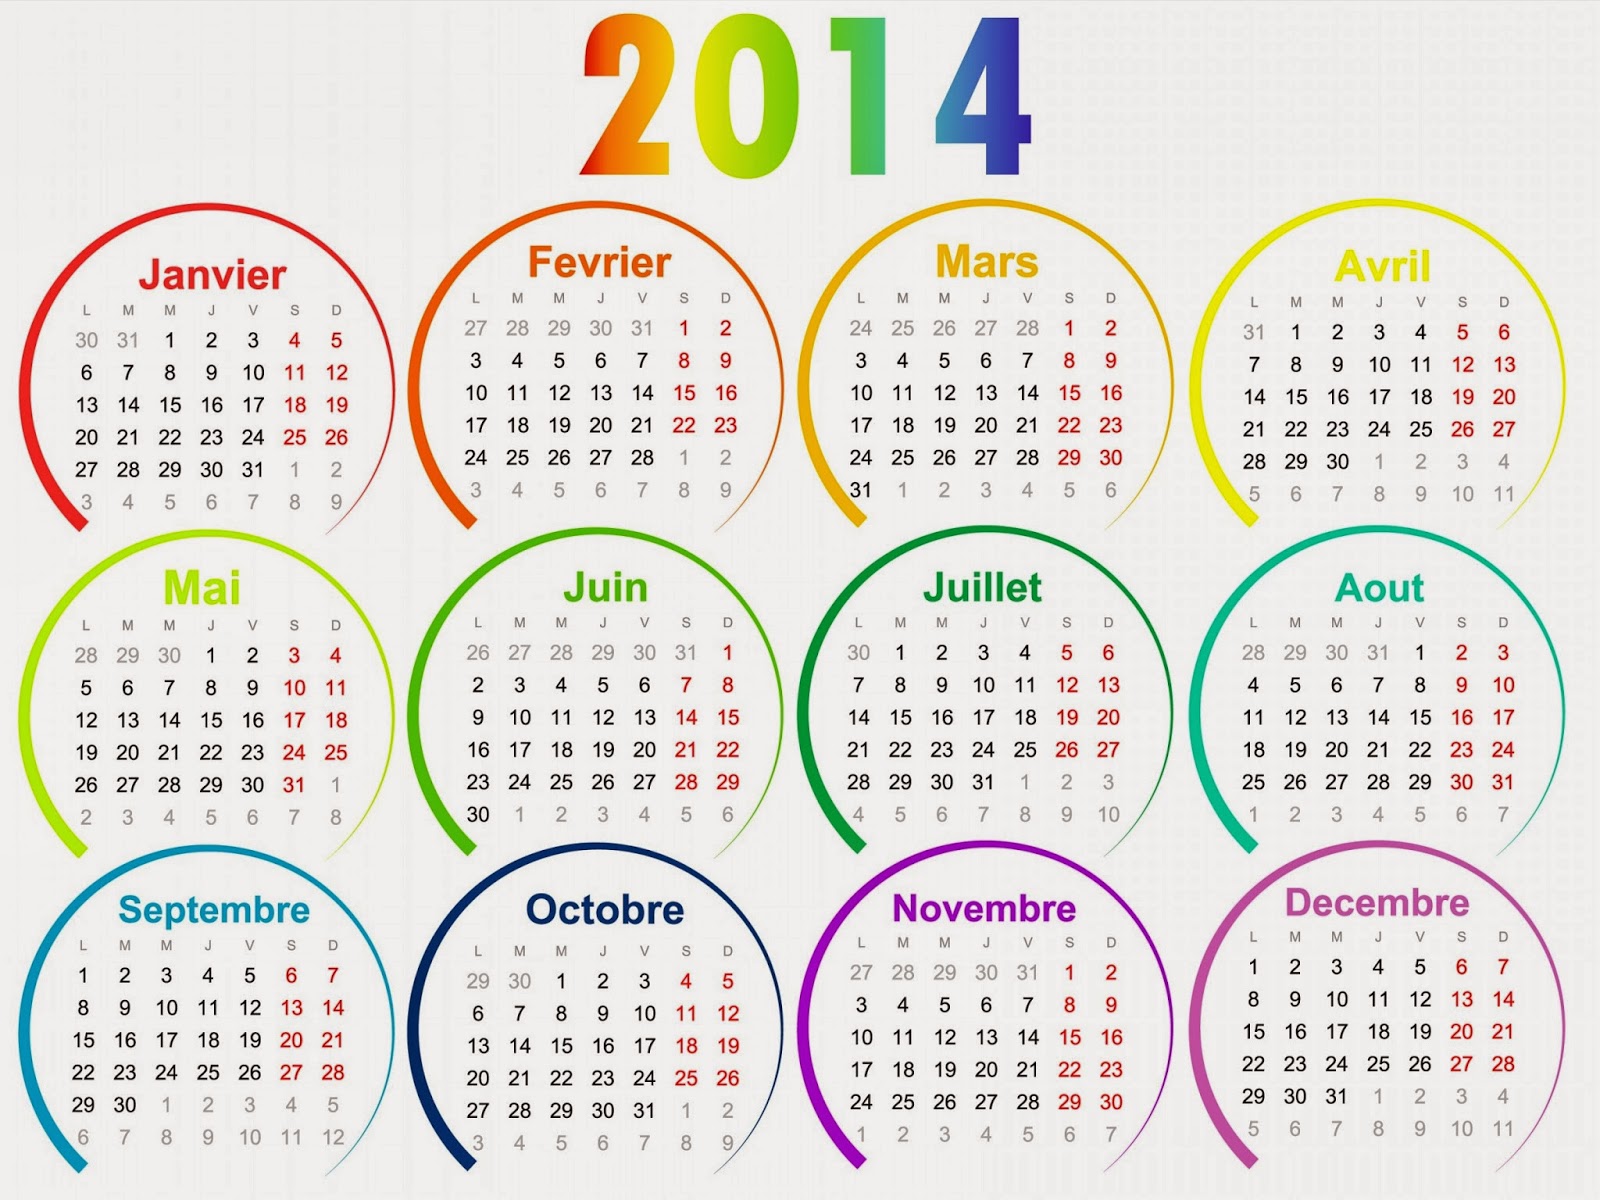 Graafix!: Year 2014 Calendar
